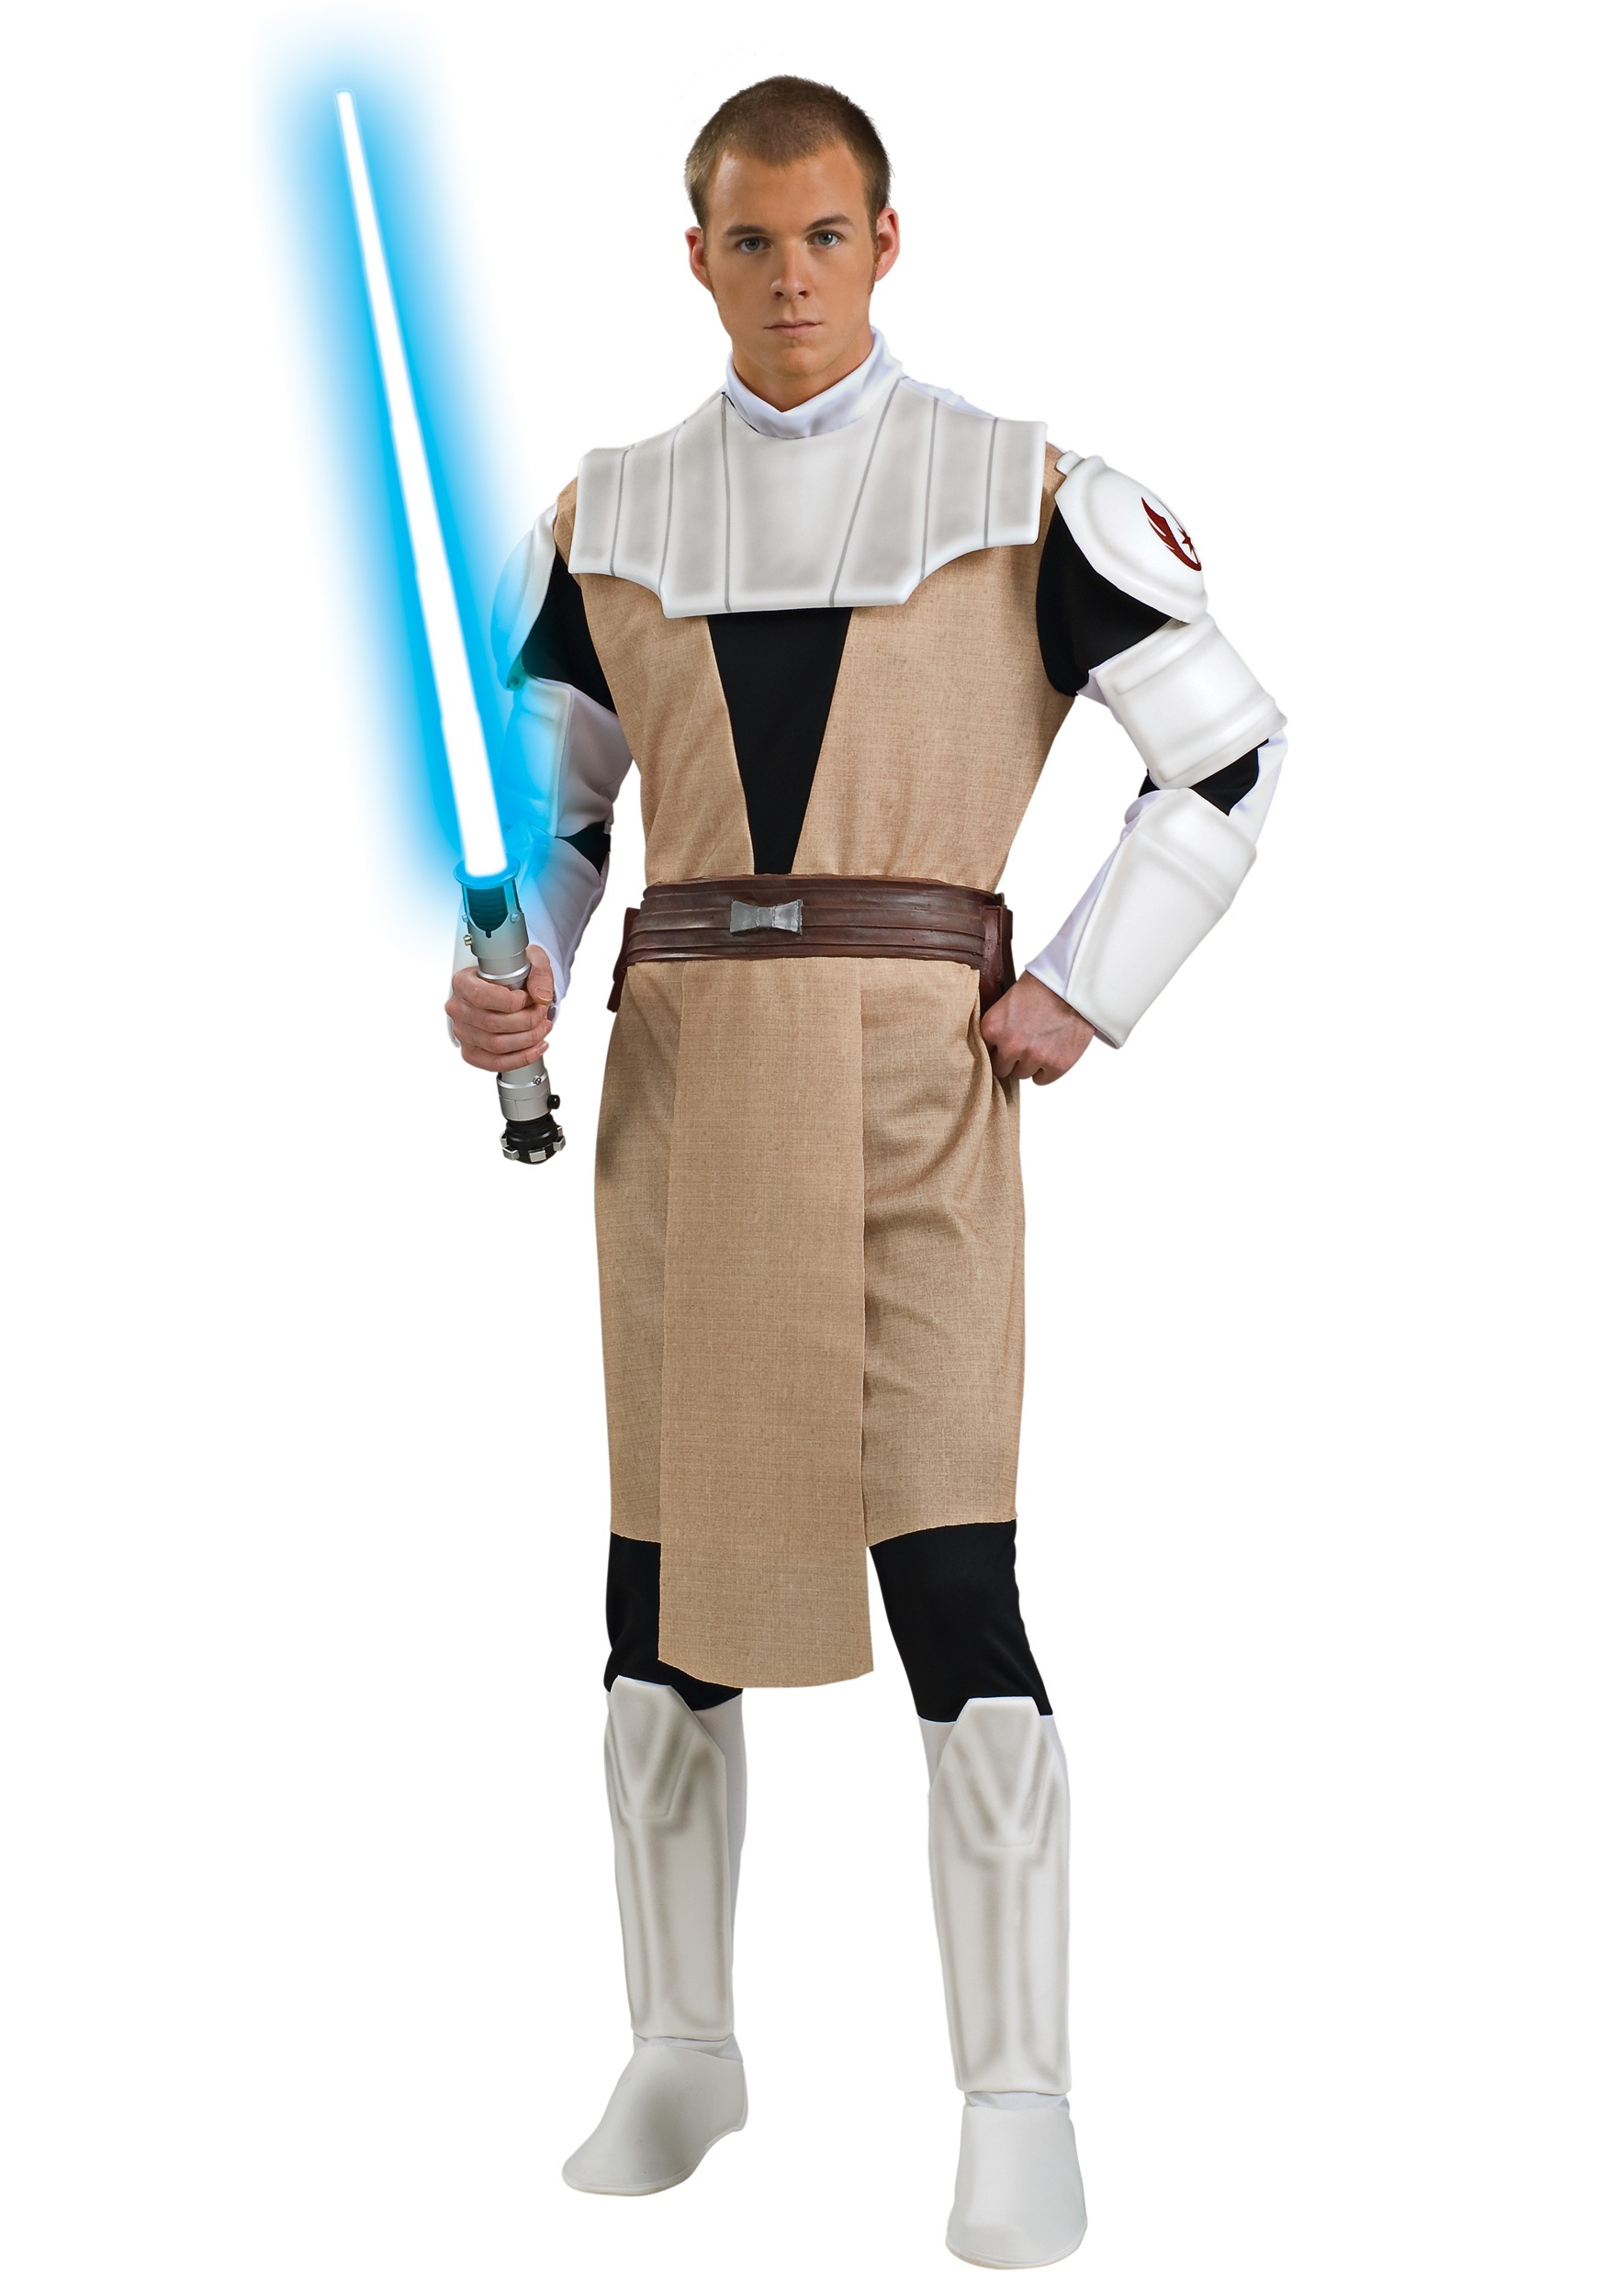 Obi Wan Kenobi Clone Wars Costume with Free Shipping in U.S., UK, Europe, C...